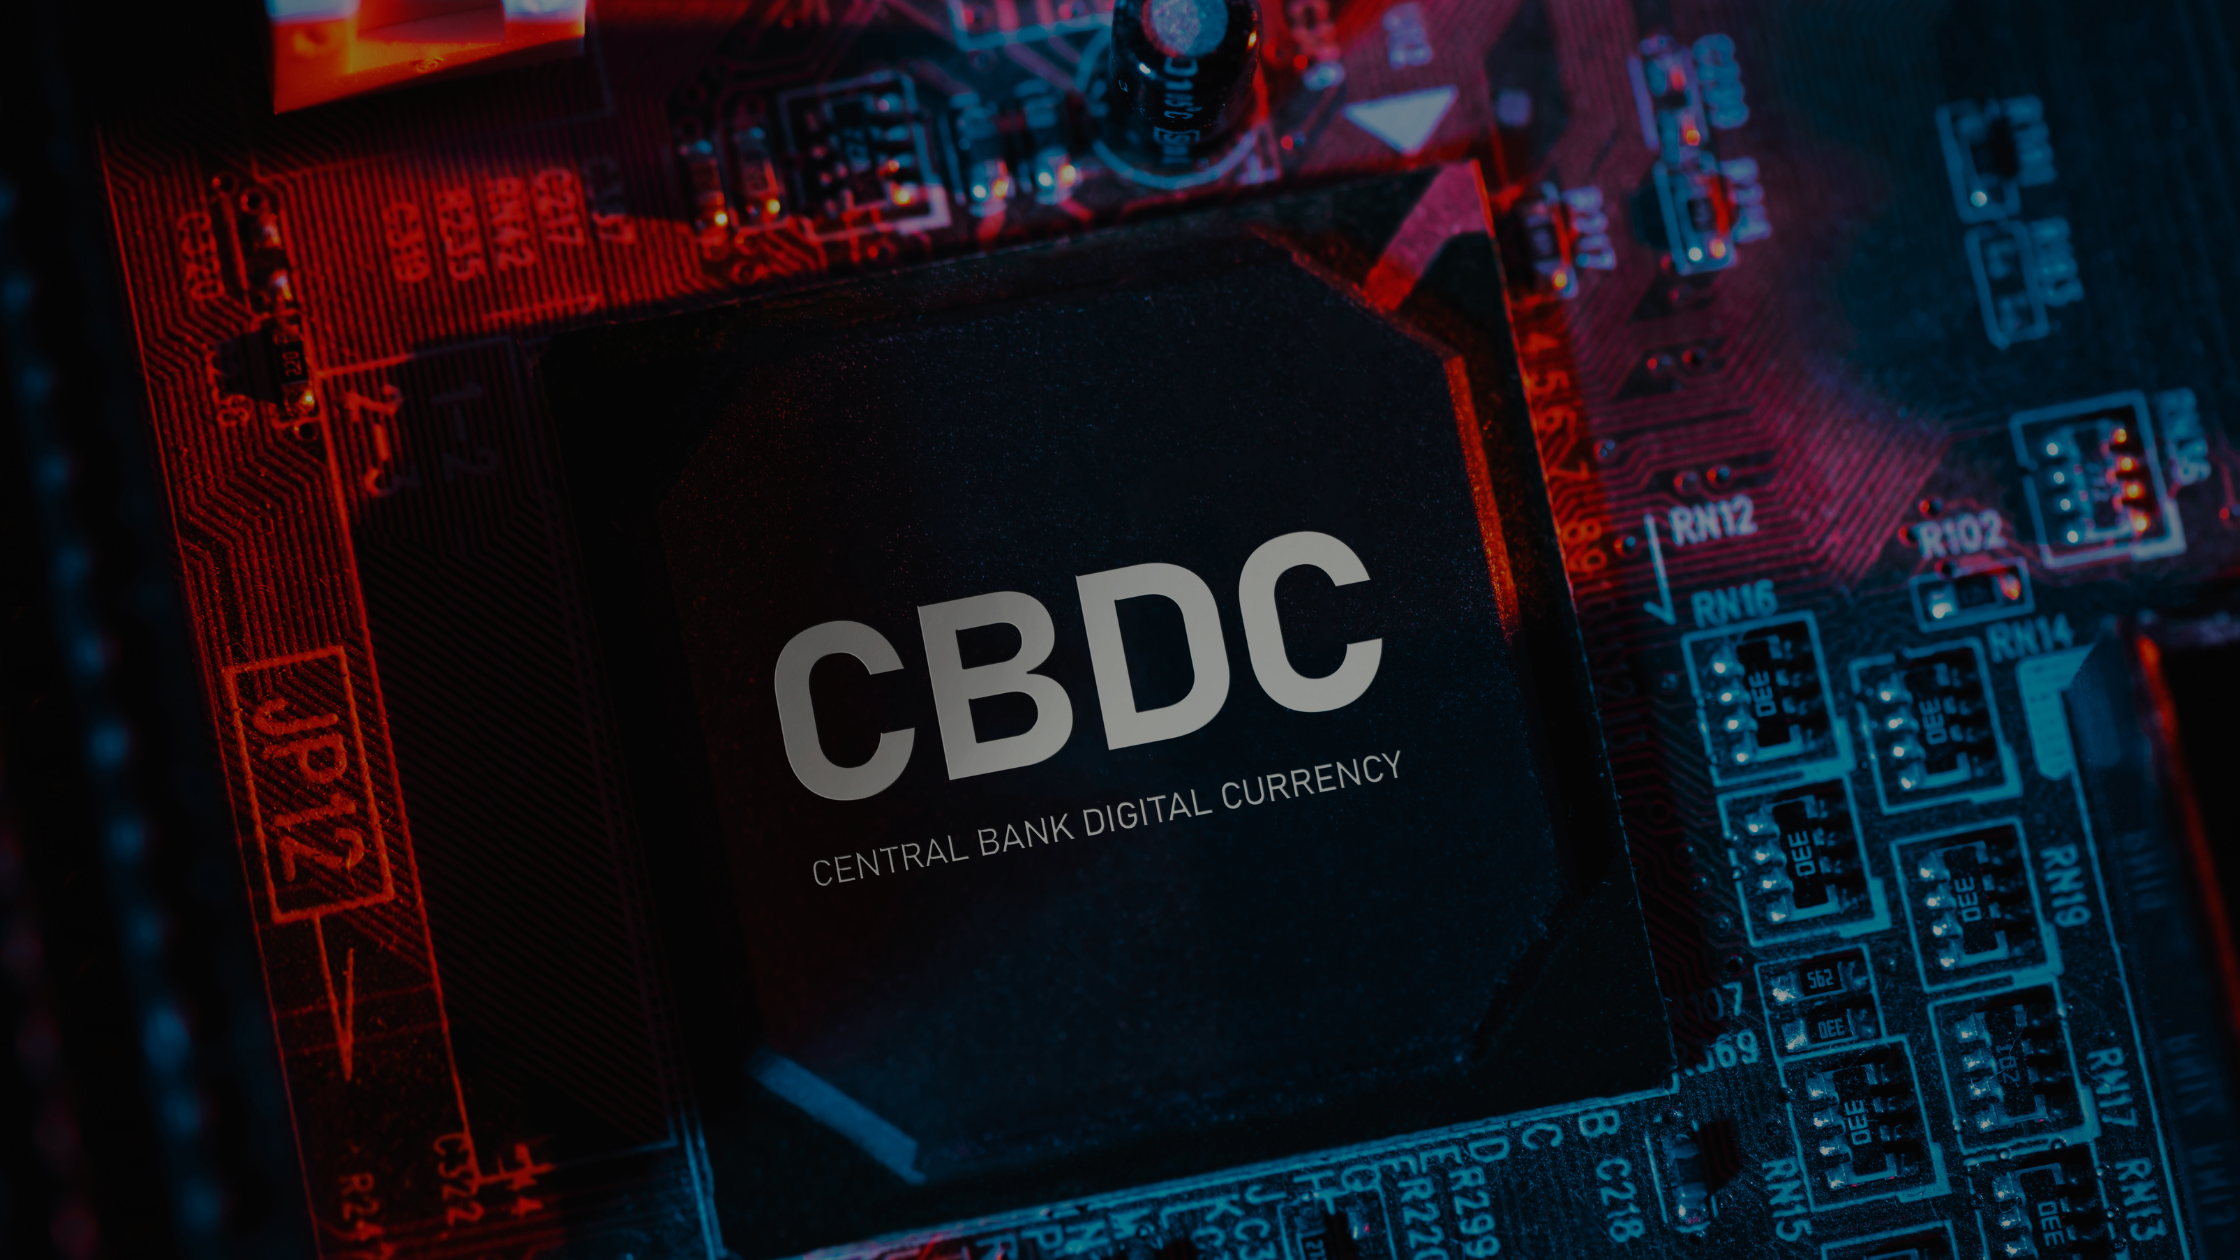 CBDC Is Connected To Pedophilia